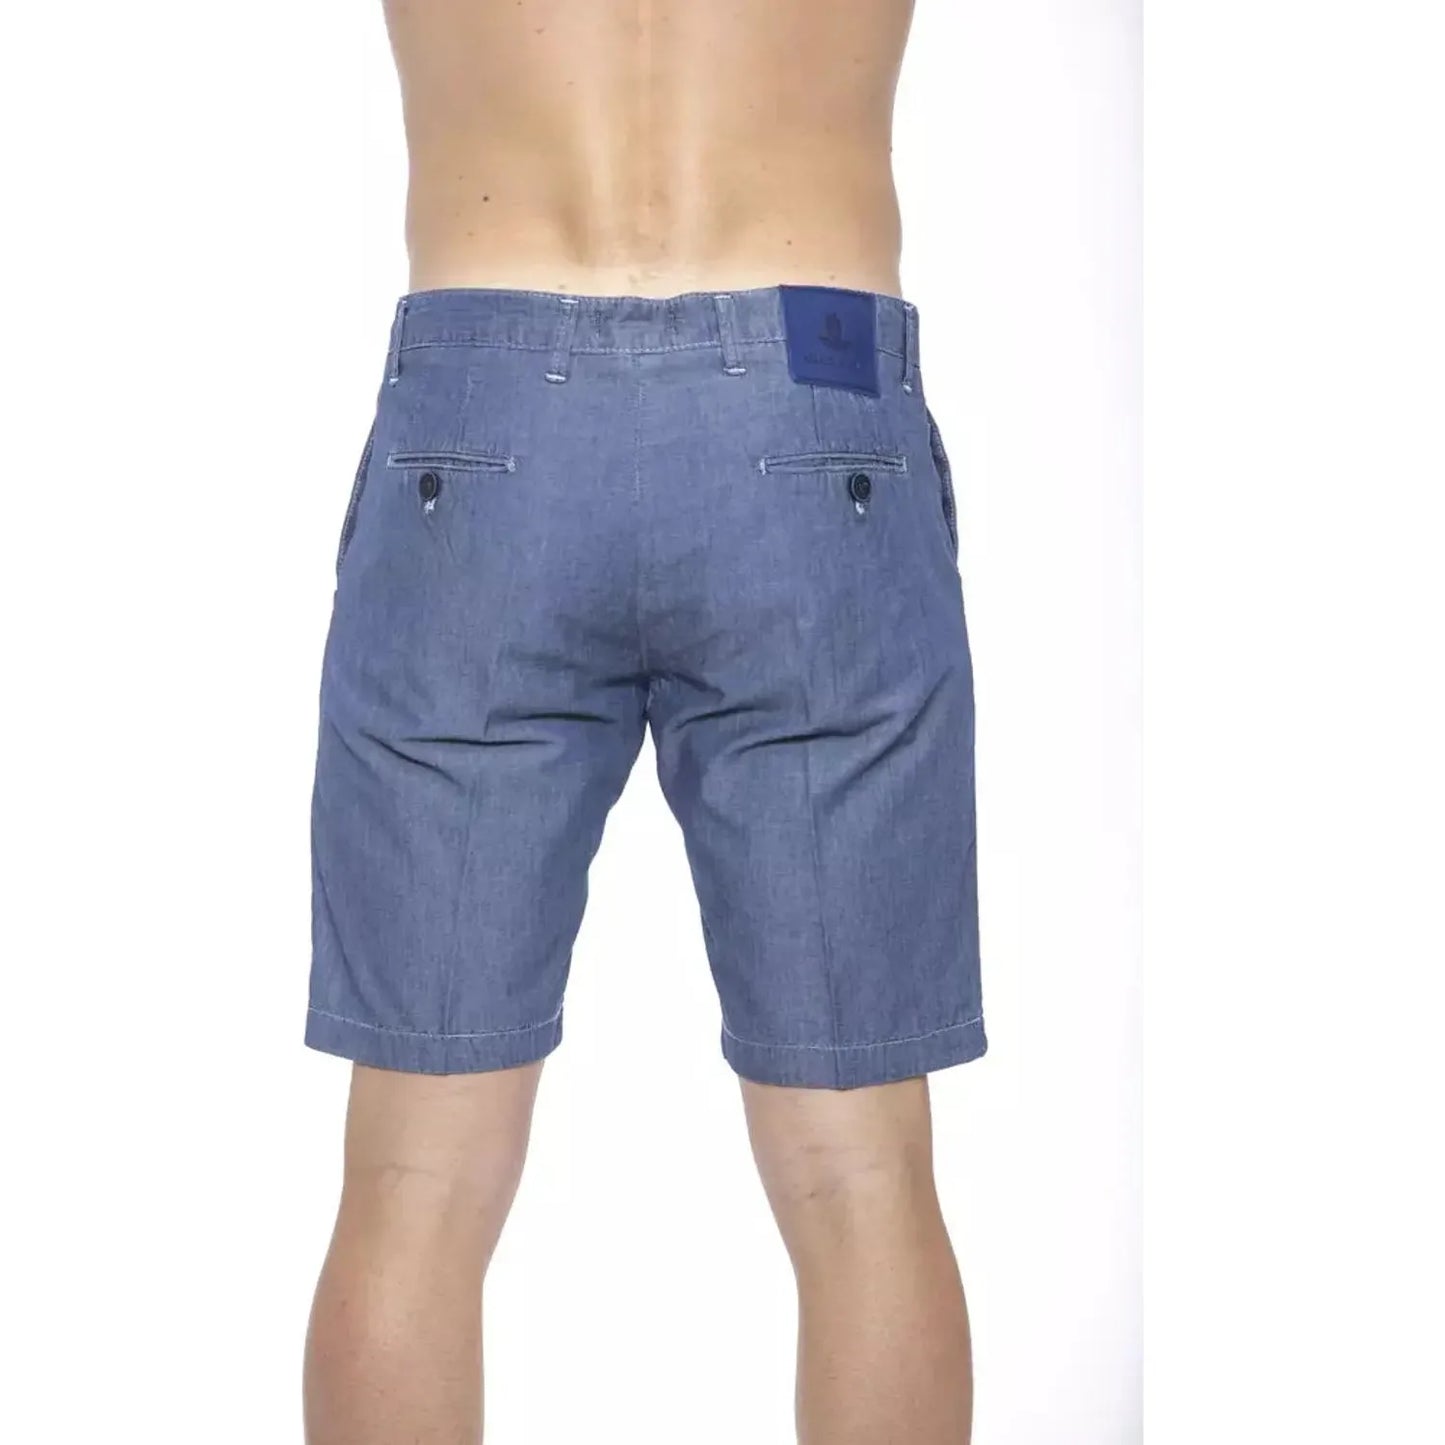 Armata Di Mare Chic Blue Cotton Bermuda Shorts for Men denim-short stock_product_image_19424_1880025557-16-a1845a0d-122.webp